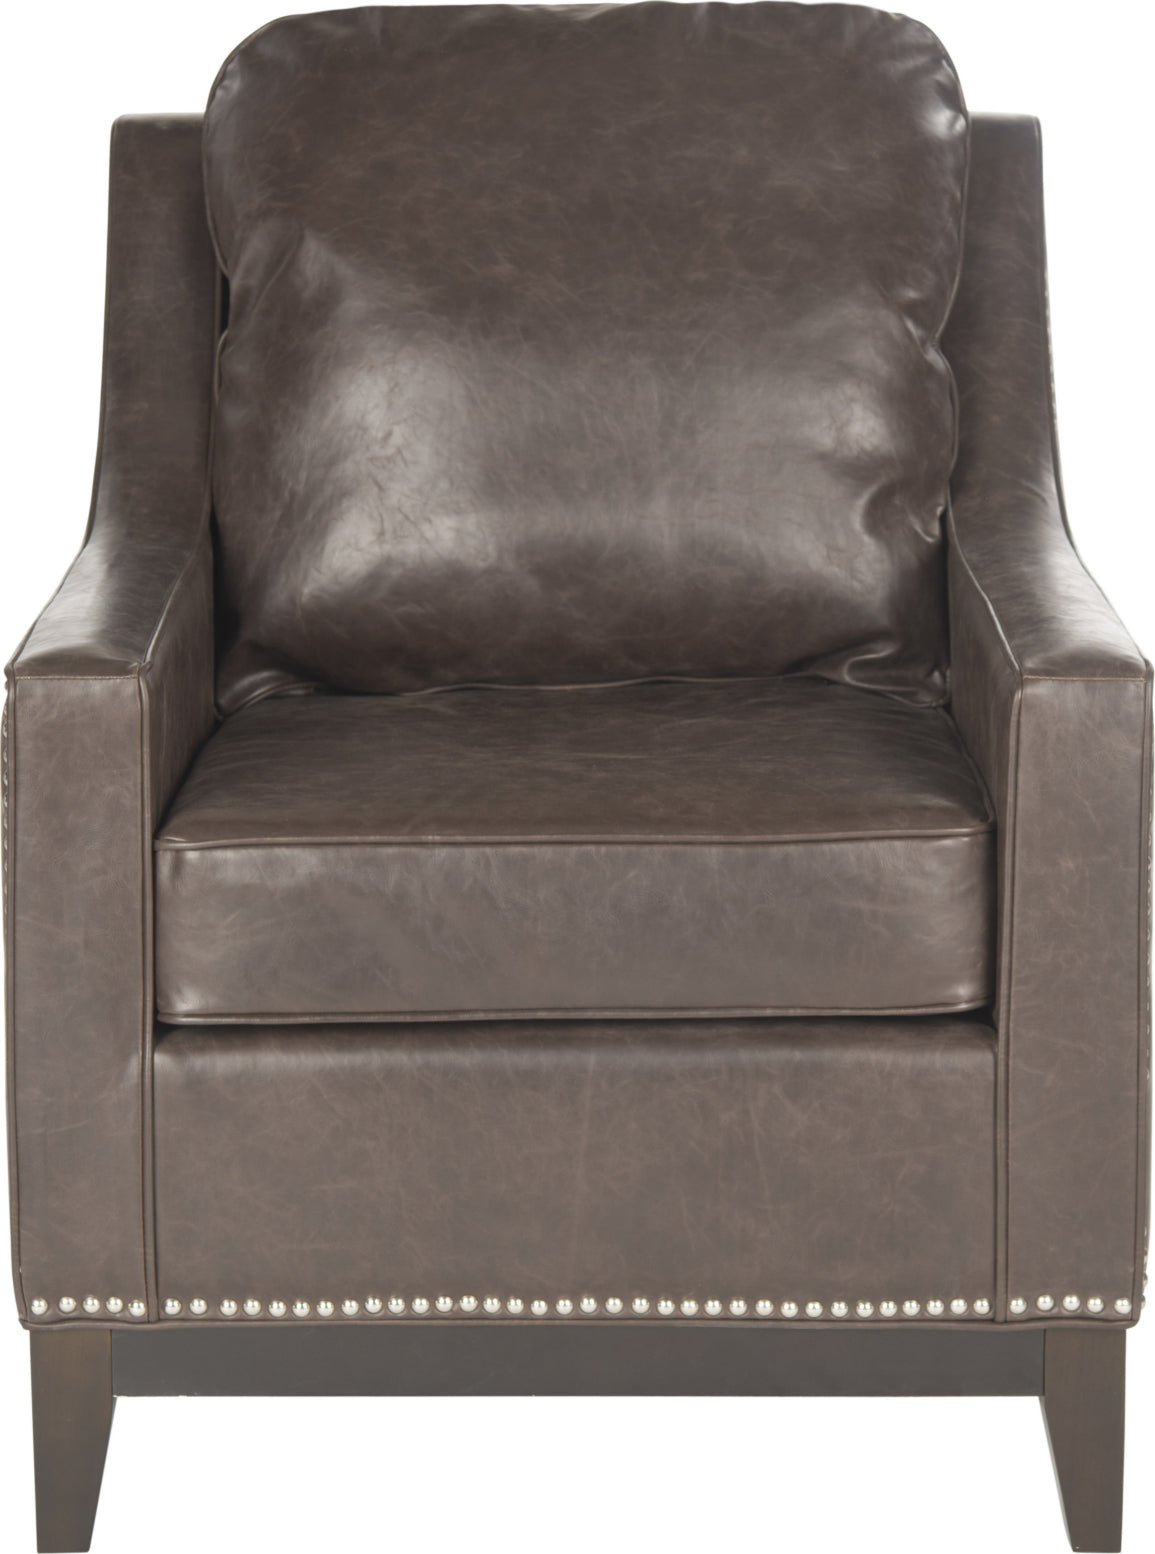 Safavieh Colton Club Chair Antique Brown and Espresso Furniture main image